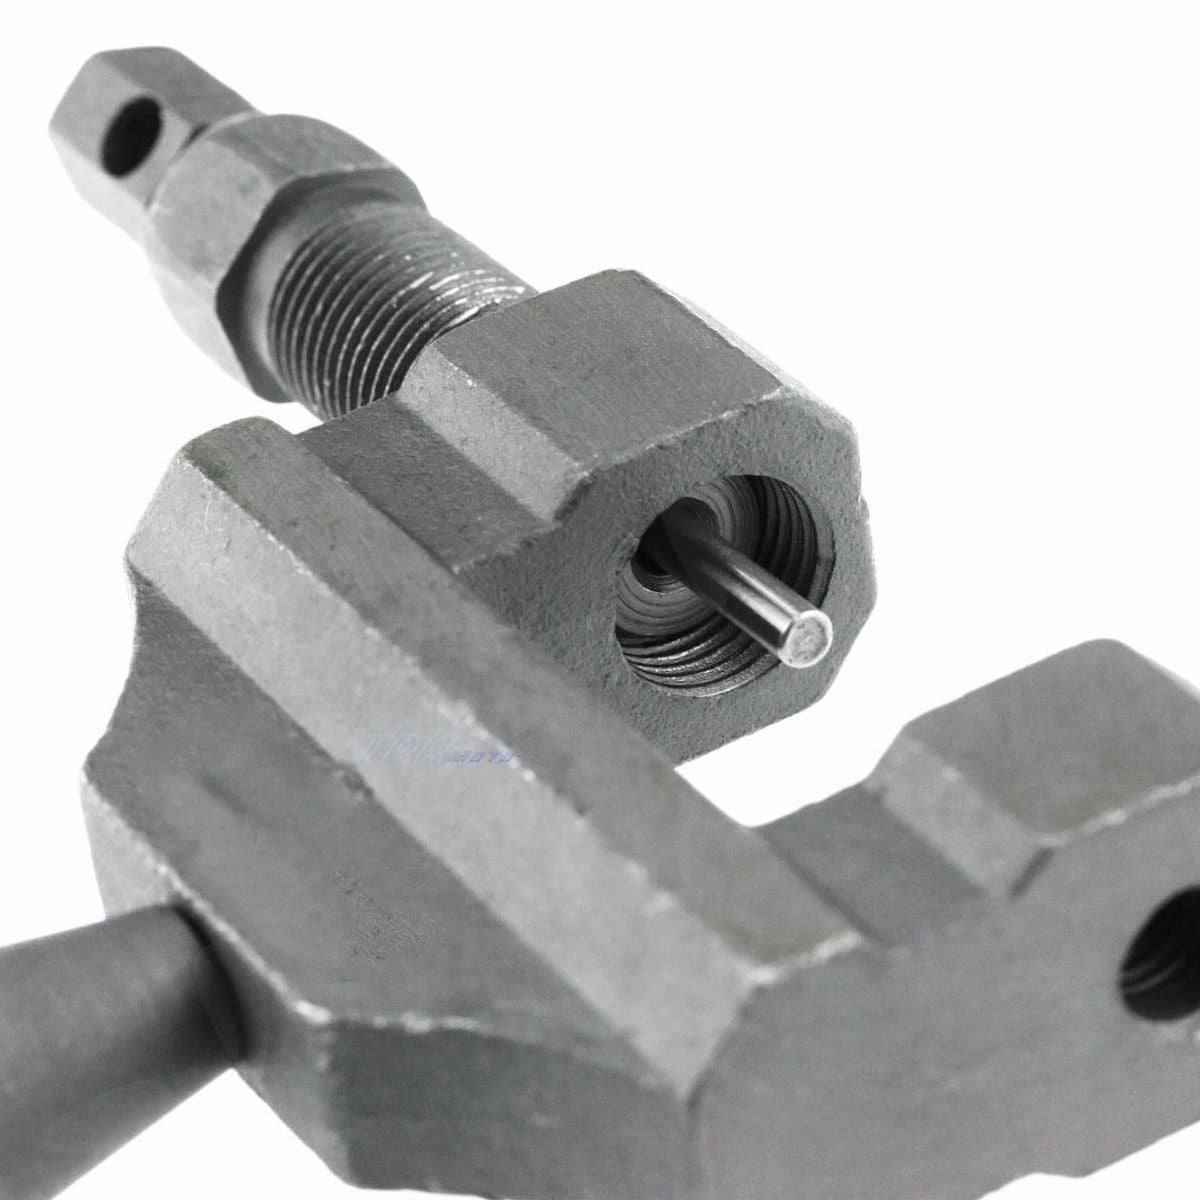 Chain Breaker Link Splitter Pin Remover Cutter Motorcycle Repair Tool - TDRMOTO